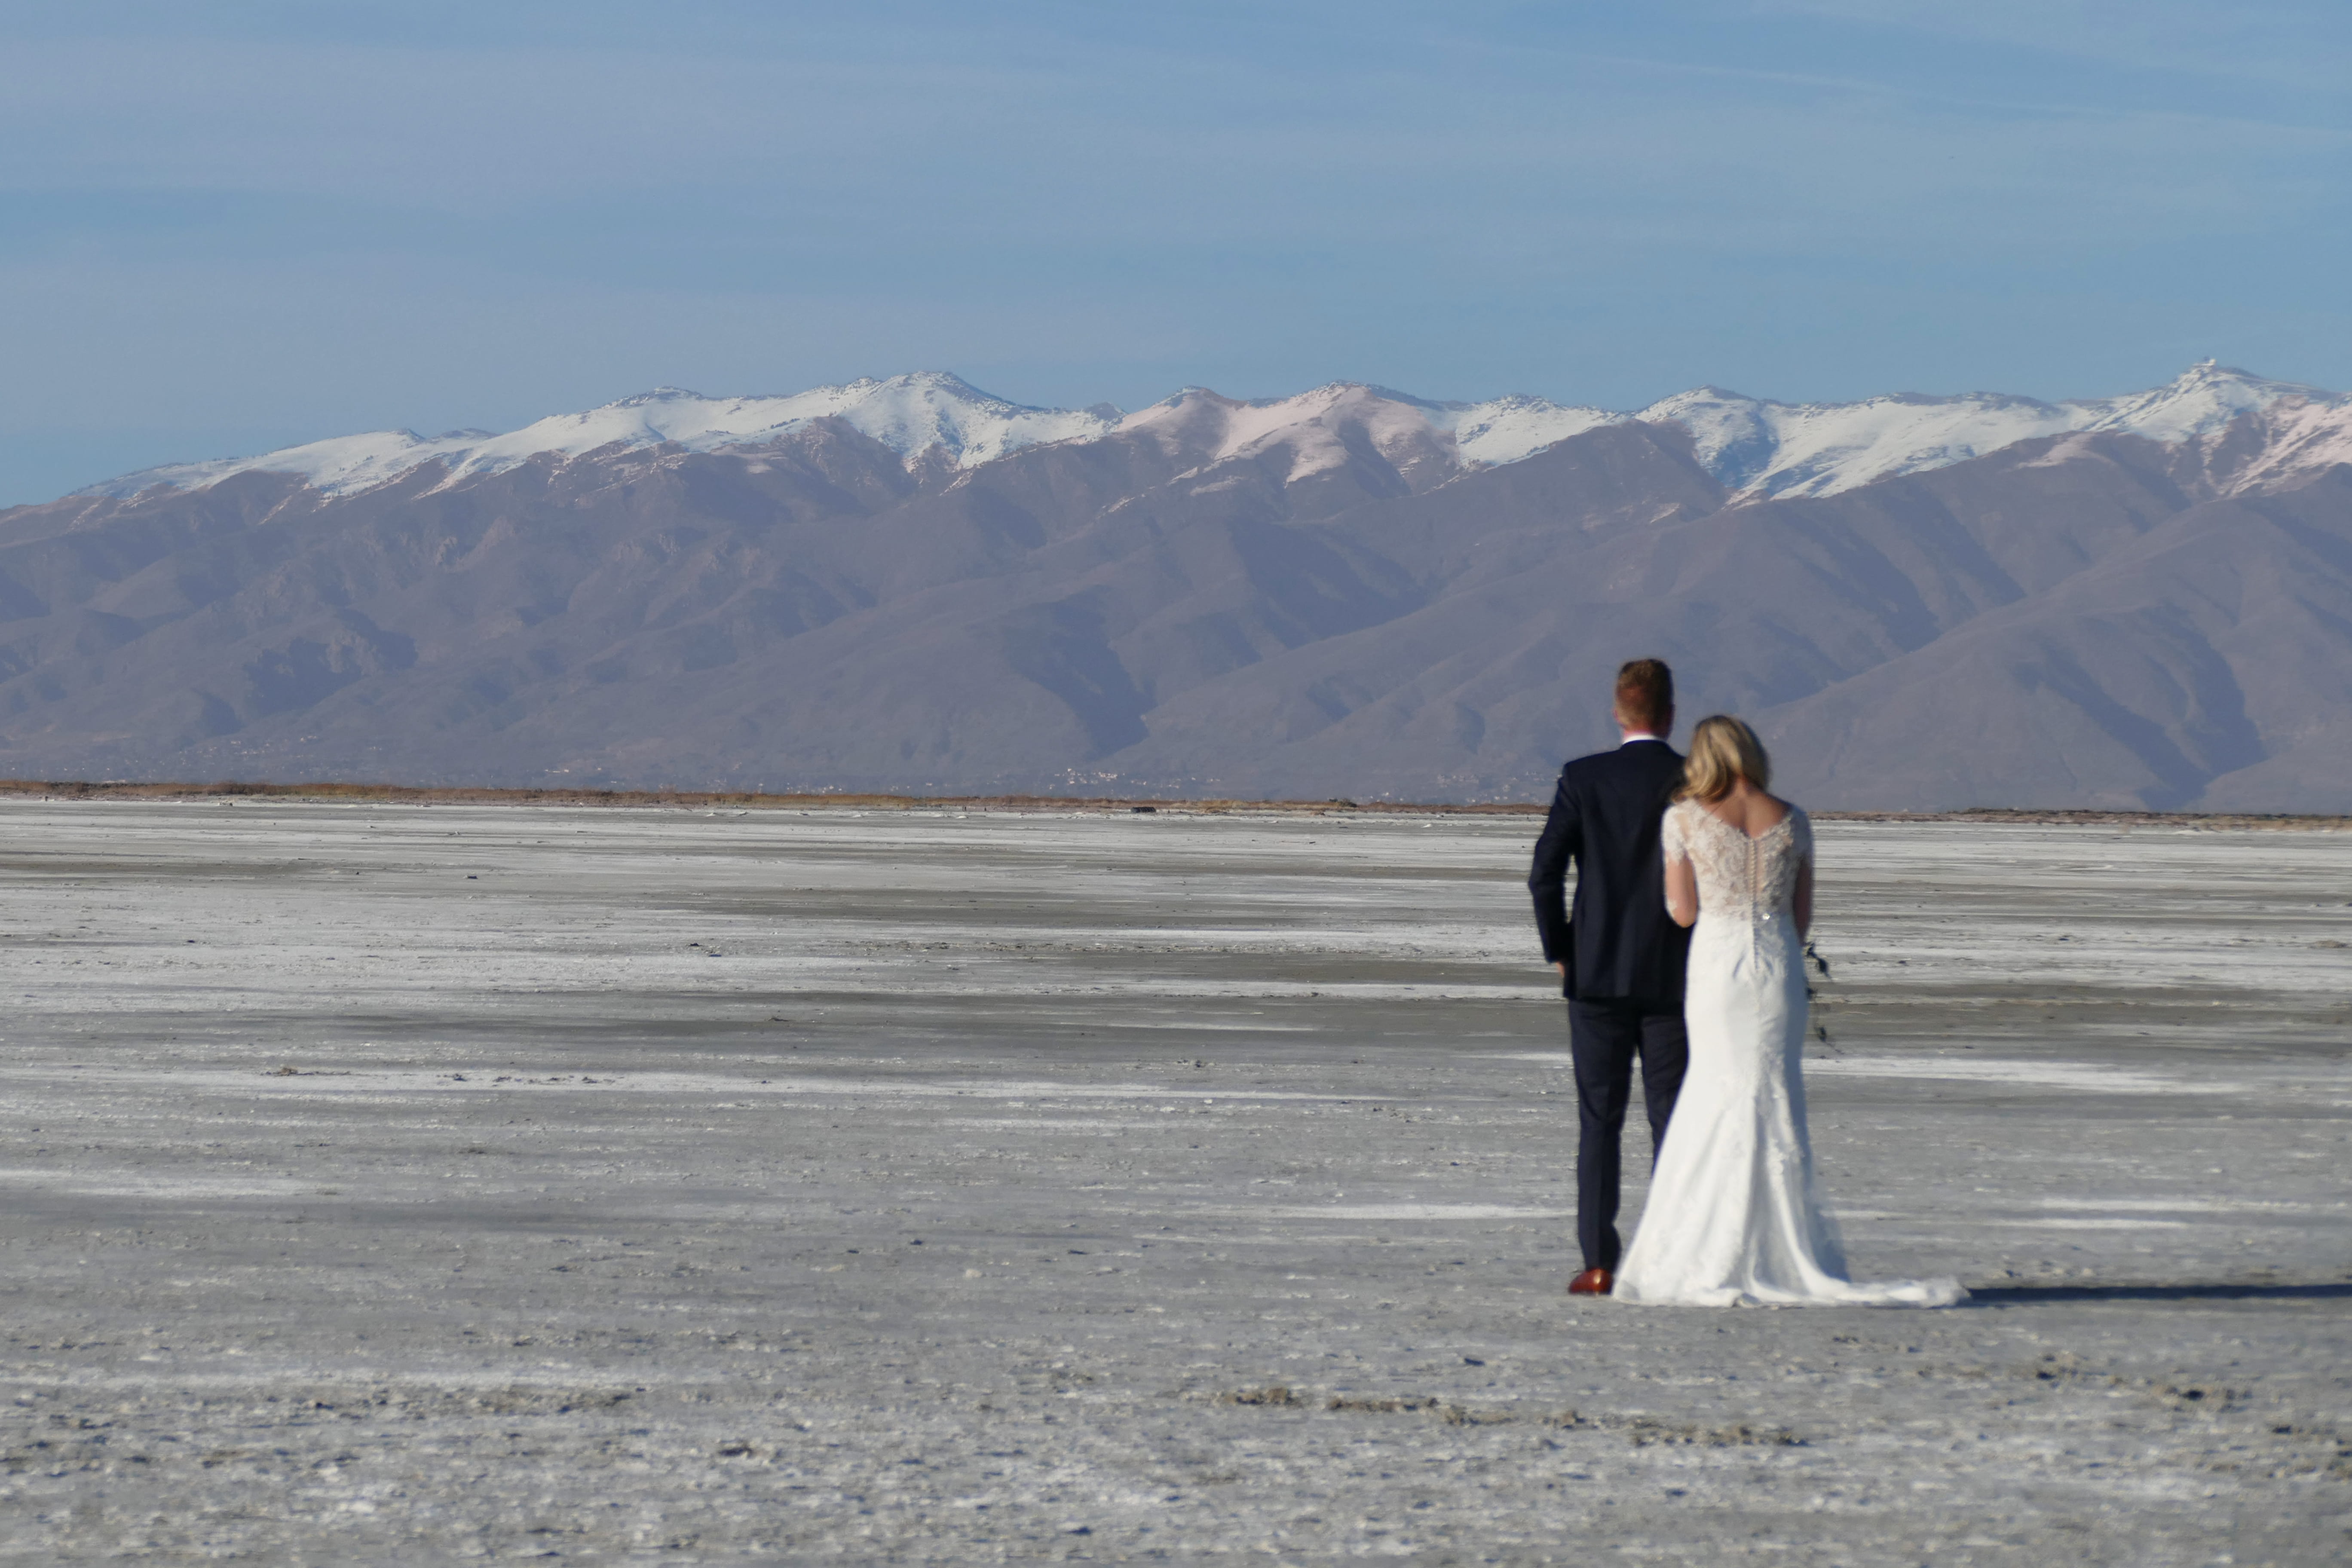 united states, great salt lake, mountains, wedding, dress, love